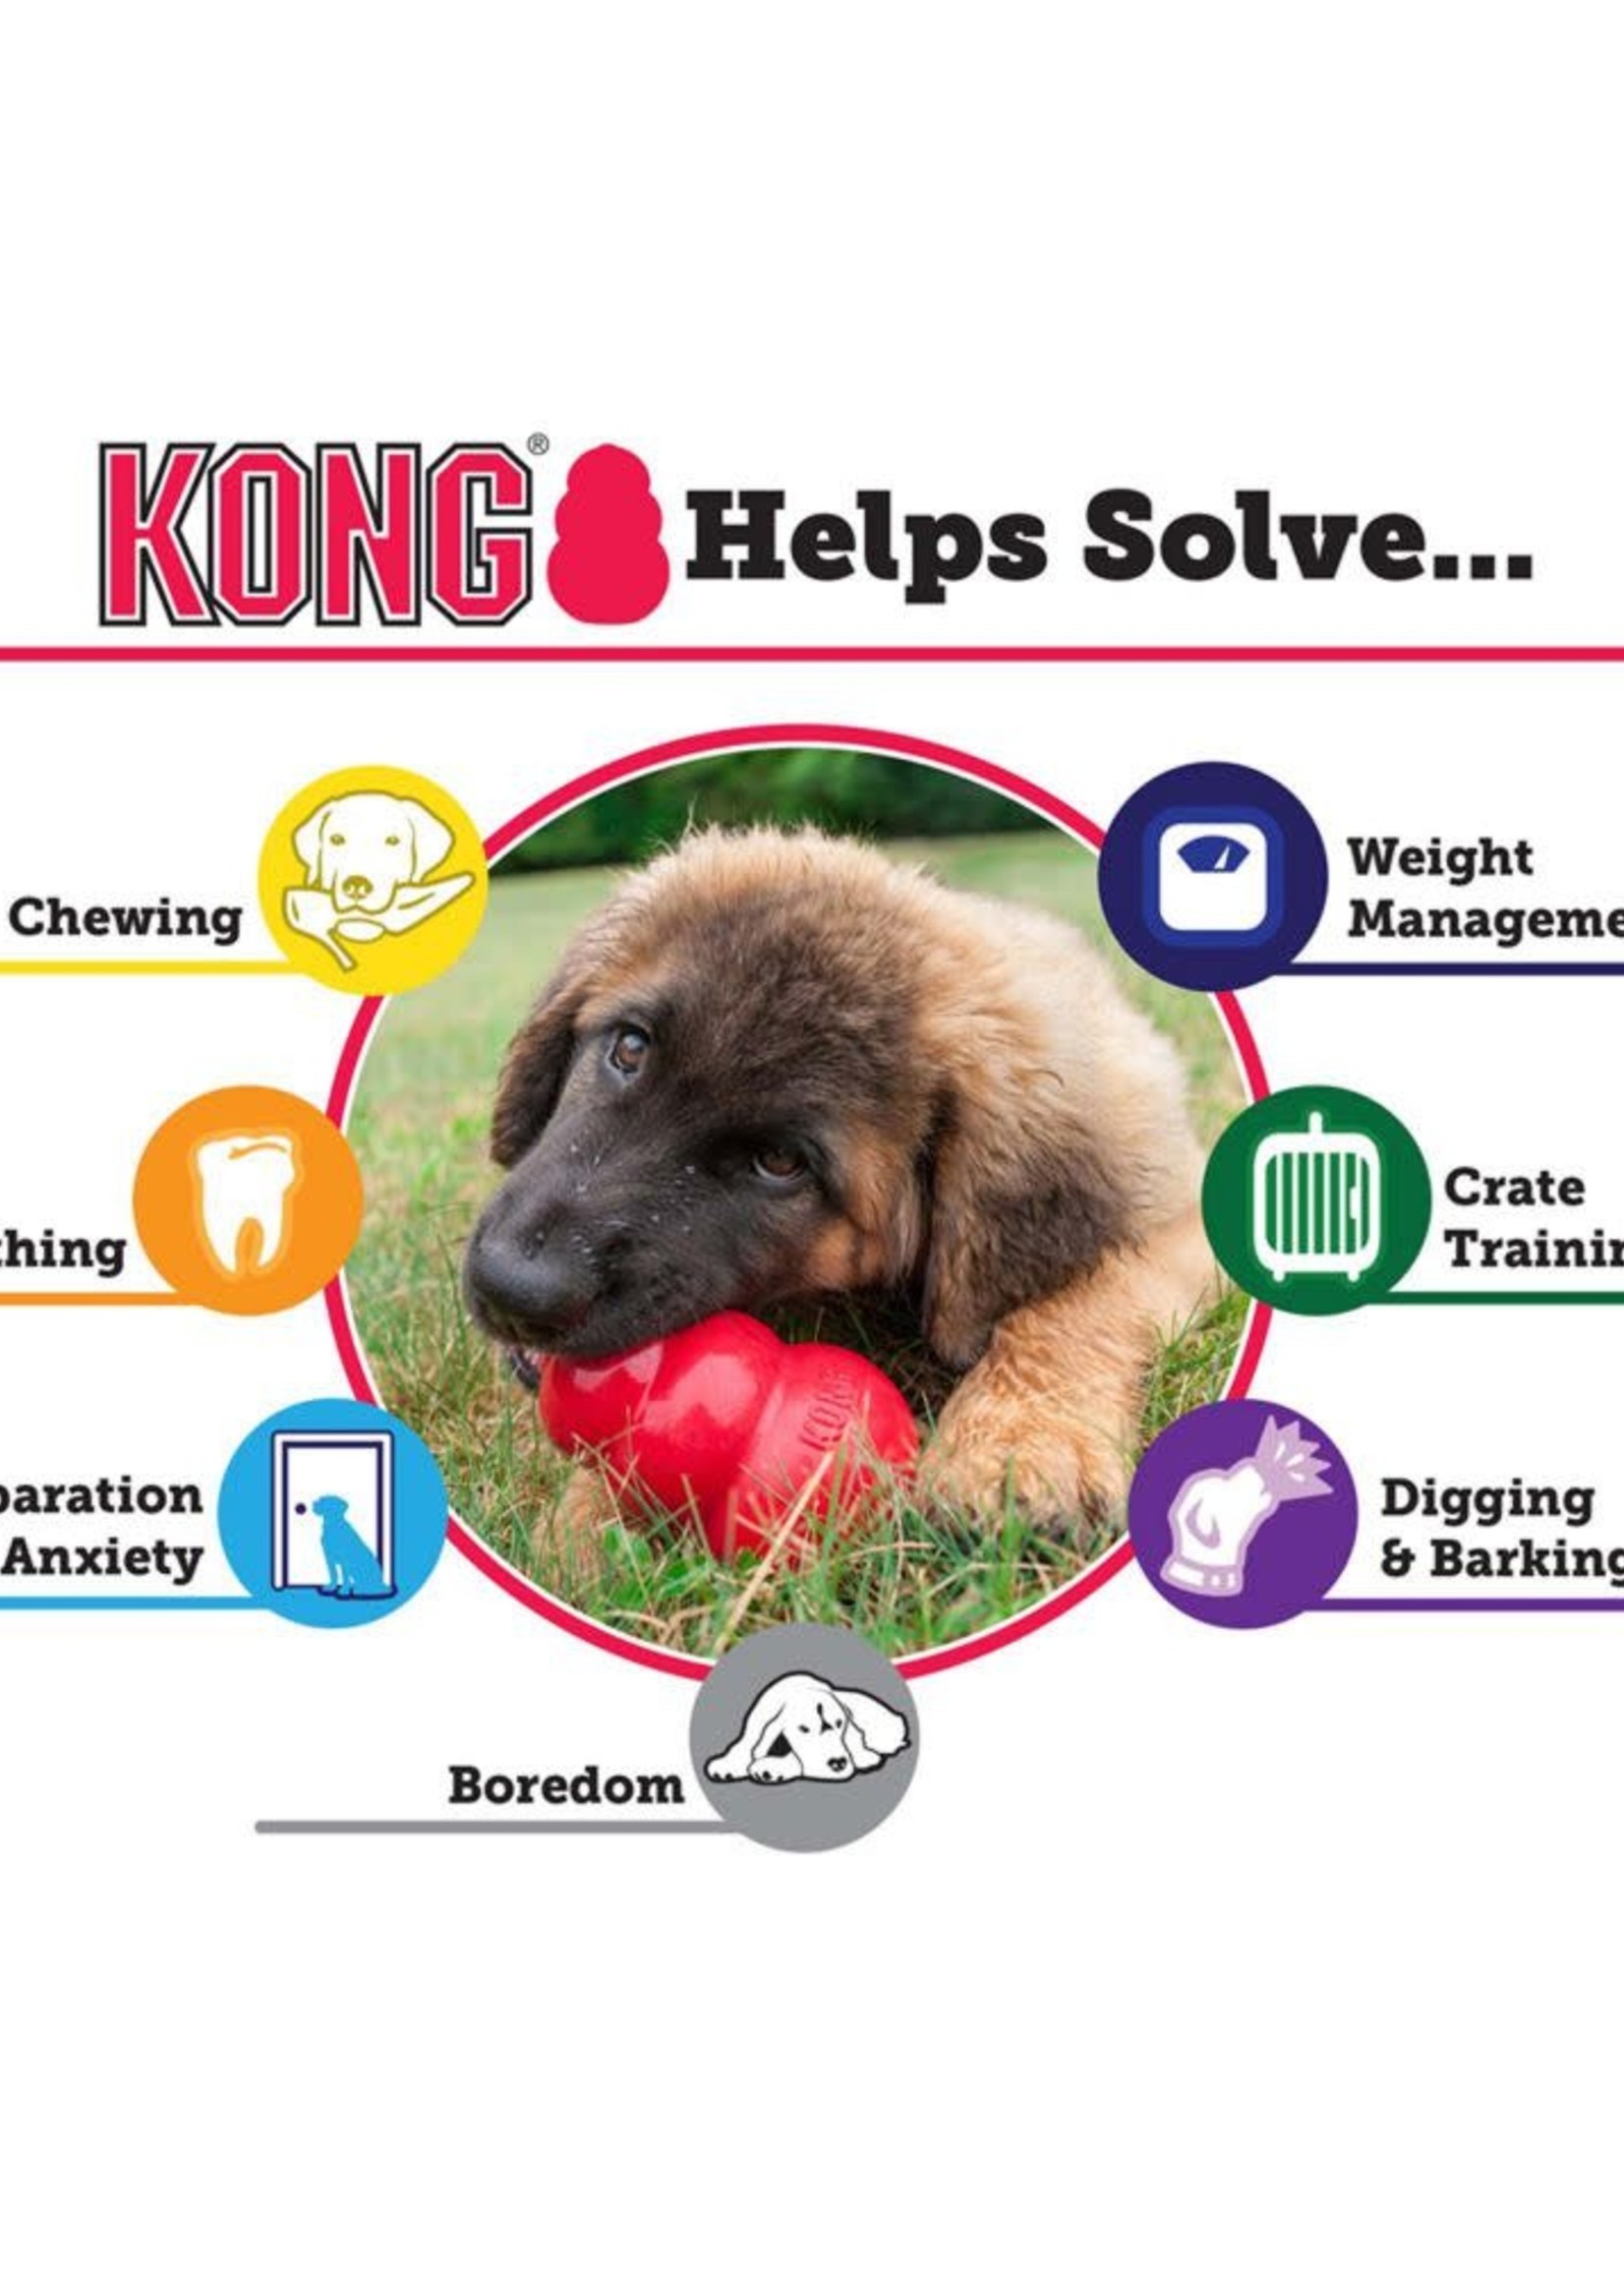 KONG KONG Classic Dog Toy